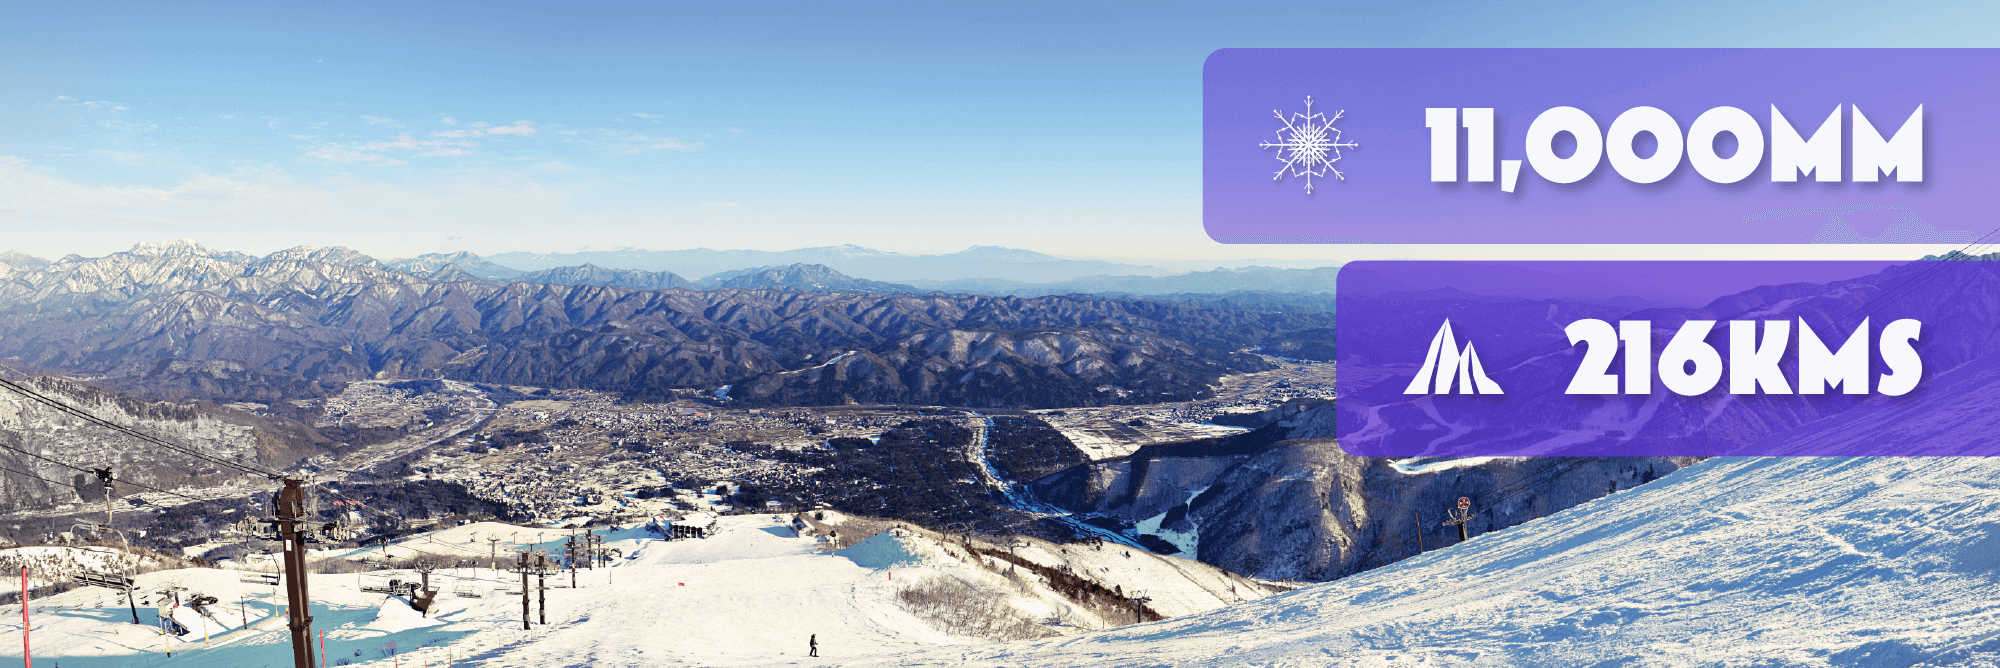 Hakuba Japan snowfields infographic